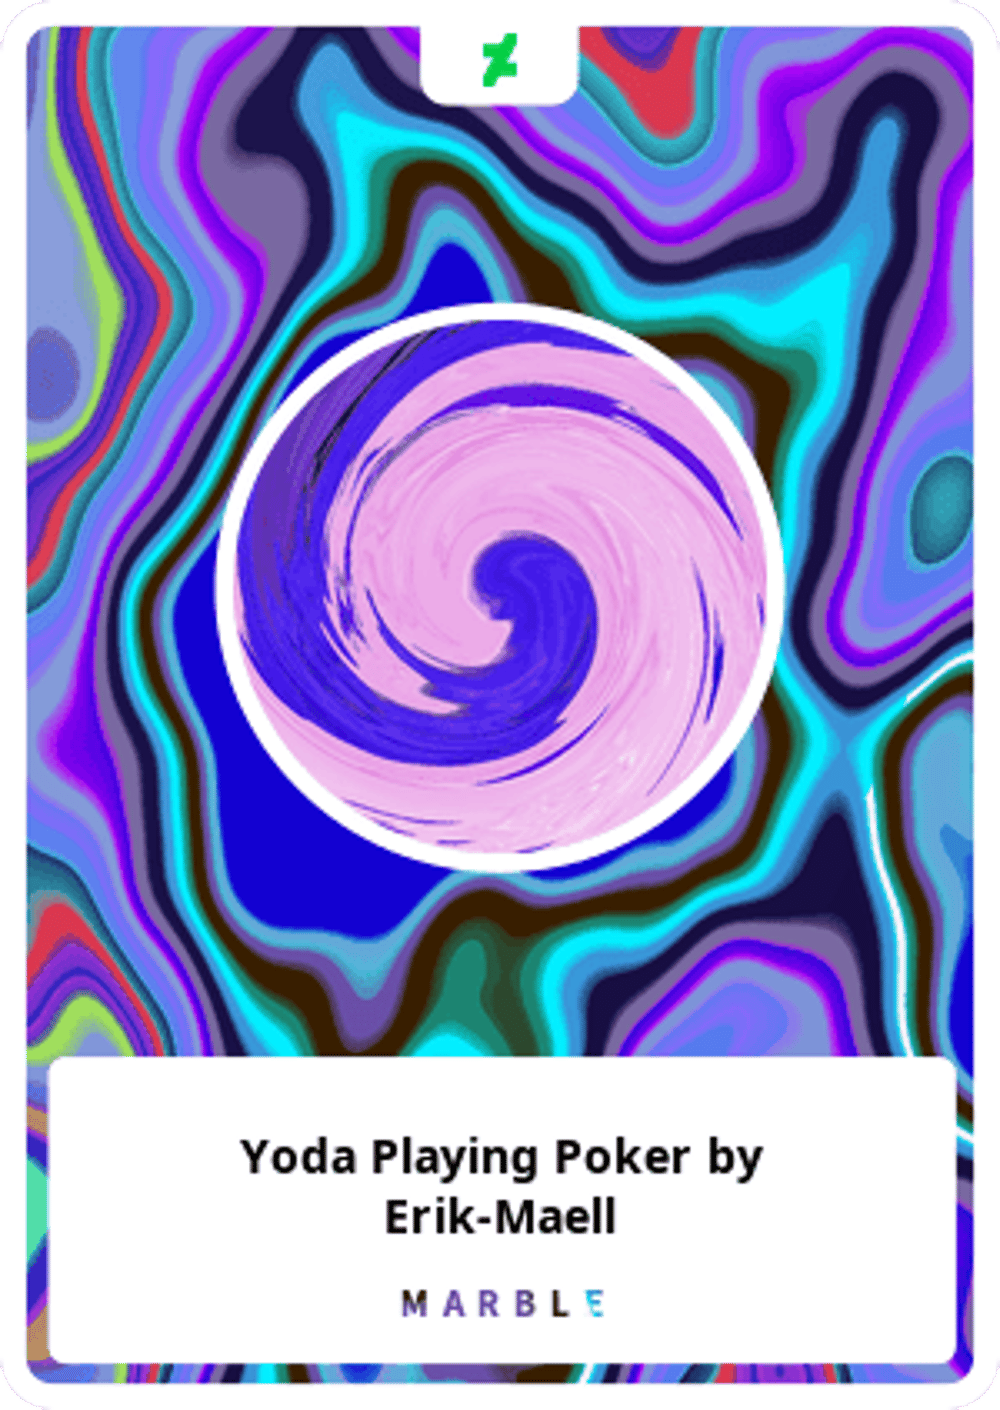 Yoda Playing Poker by Erik-Maell